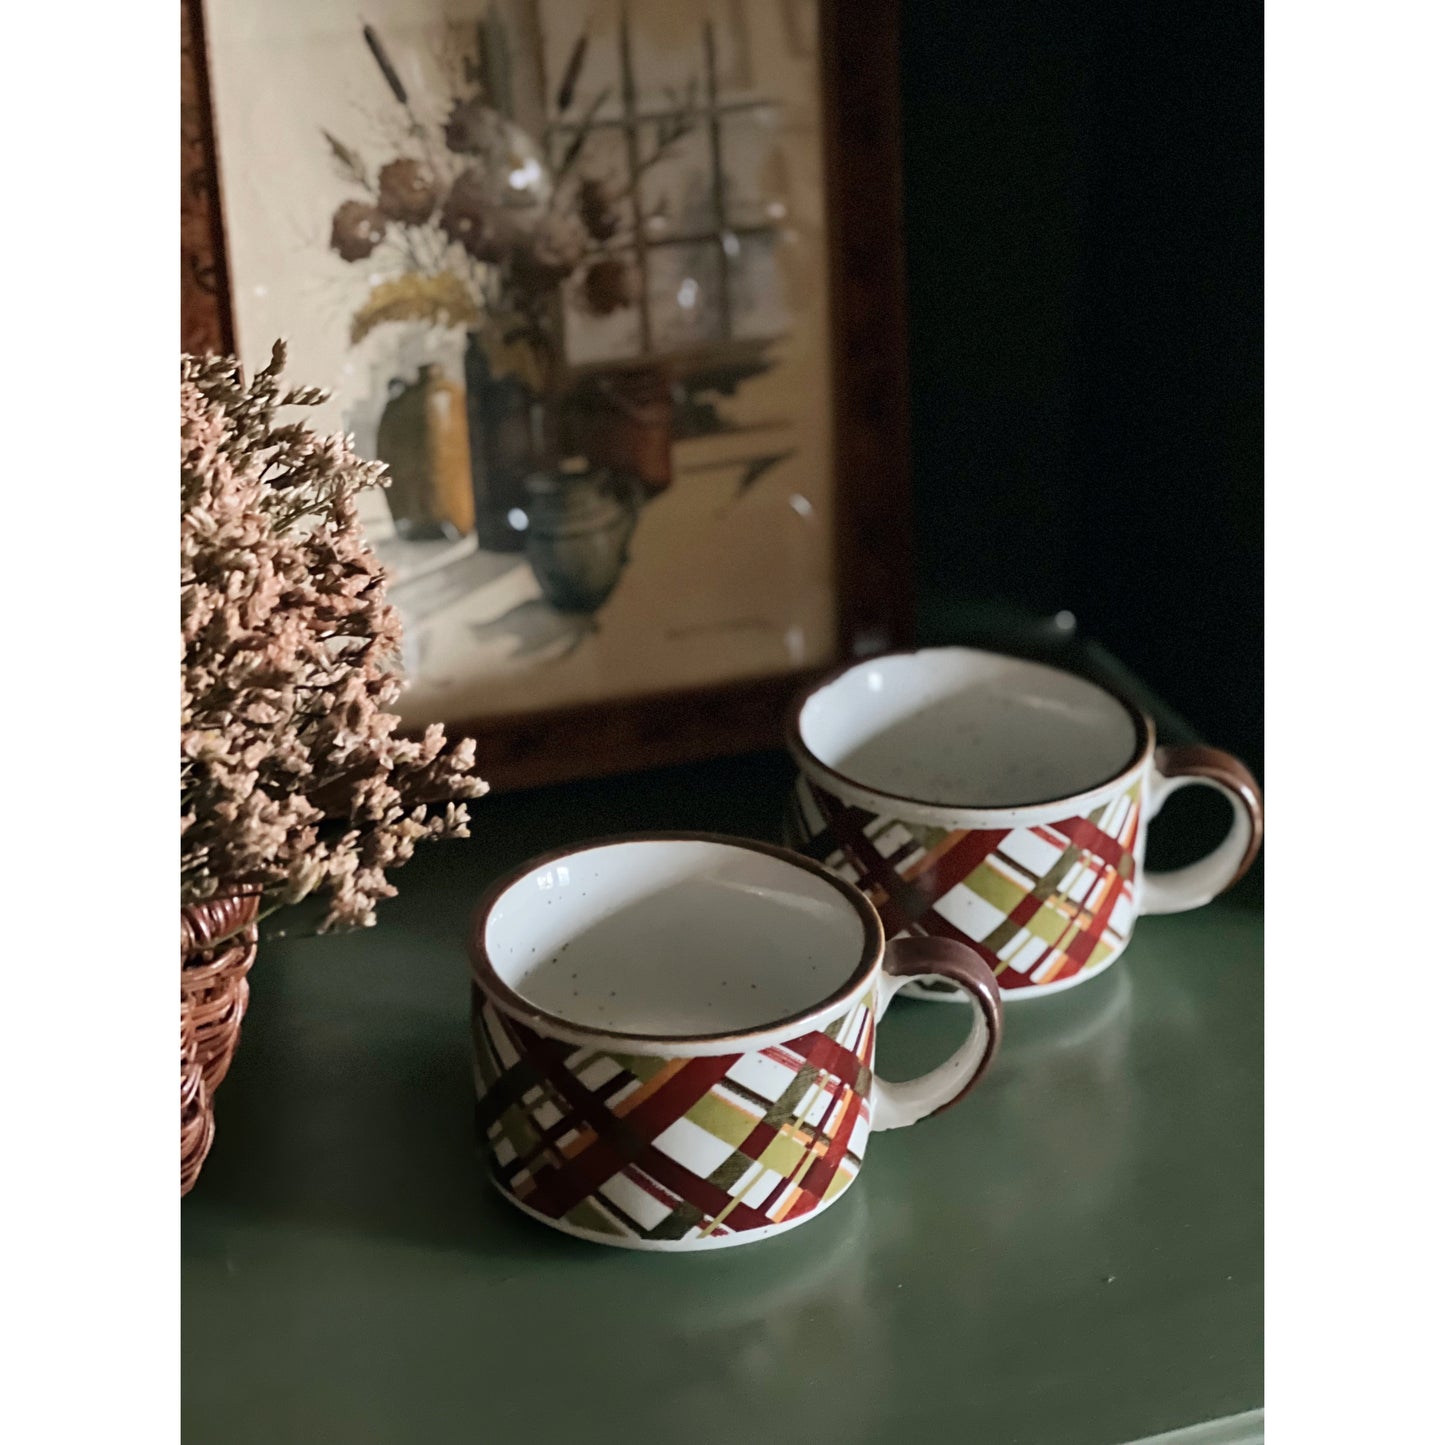 Suntrails by Enesco Vintage Stoneware Soup Mug